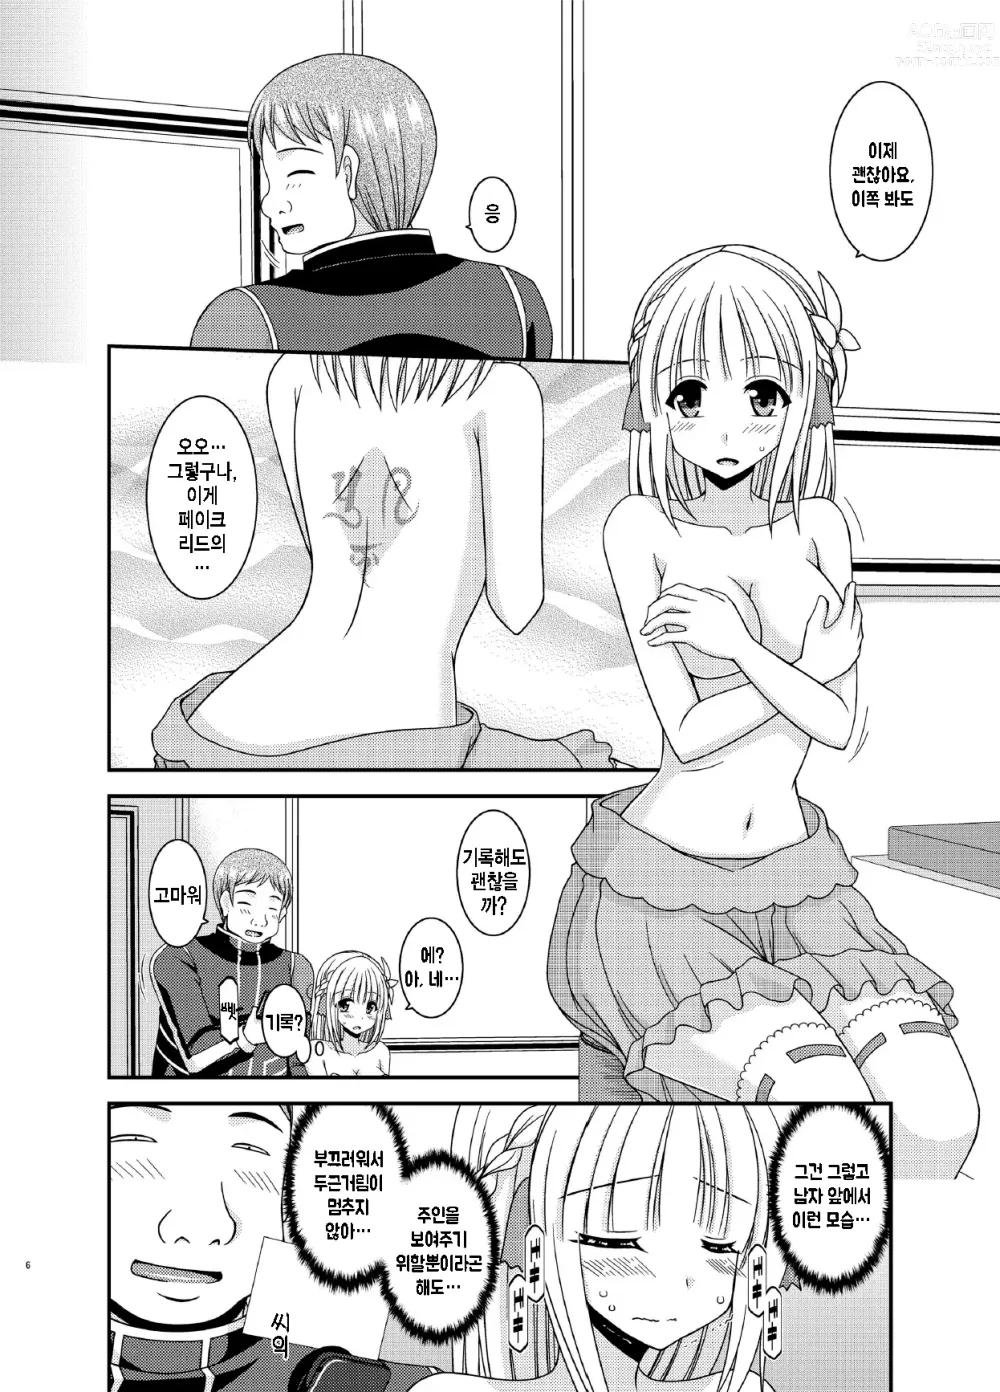 Page 5 of doujinshi Iseijin to no Sex wa No Count dakara...